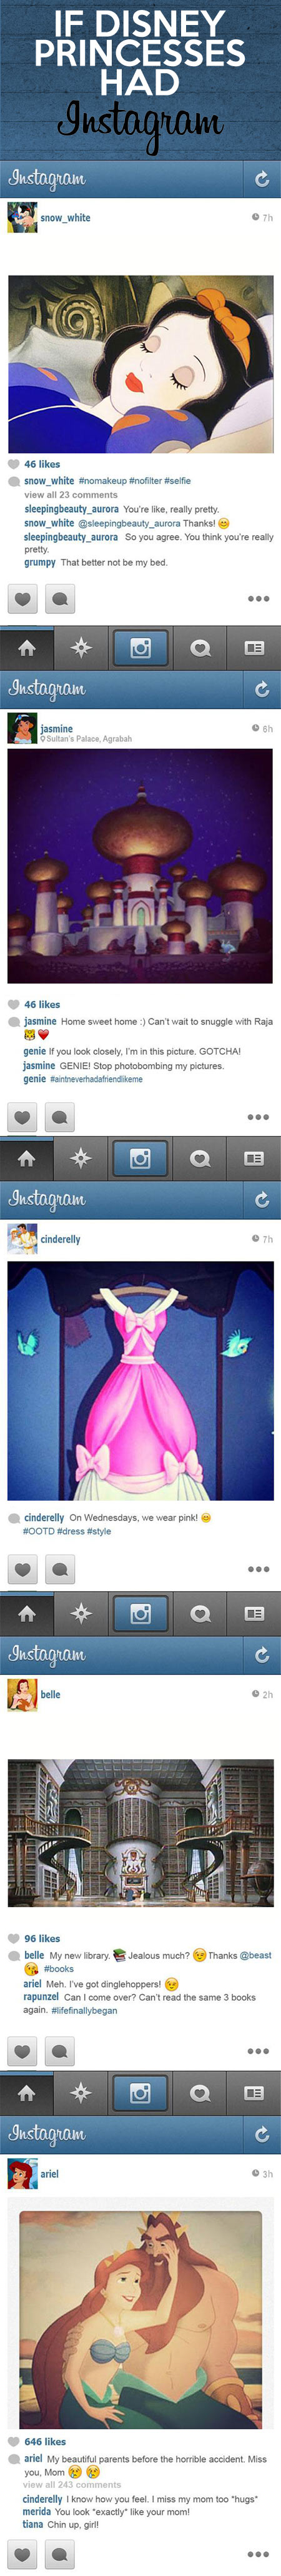 If Disney Princesses had Instagram...